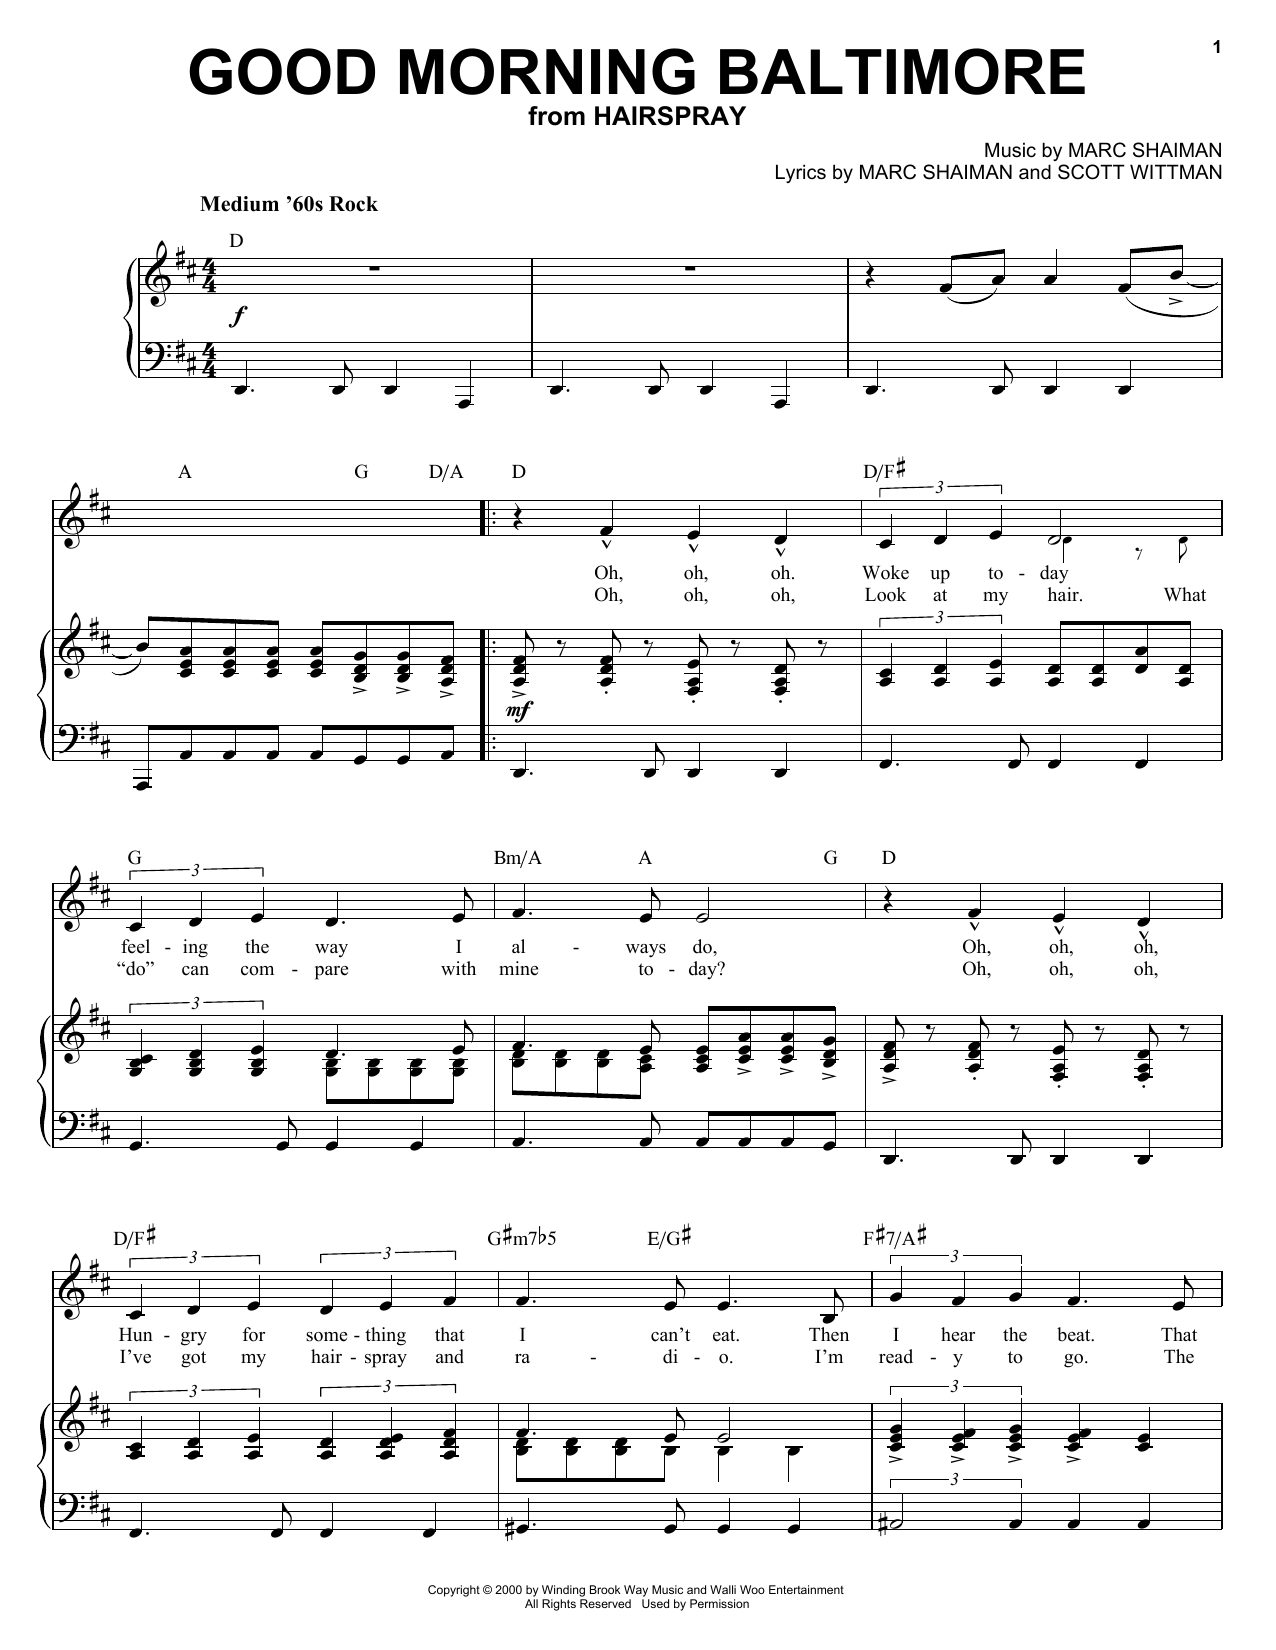 Marc Shaiman Good Morning Baltimore Sheet Music Notes & Chords for Piano & Vocal - Download or Print PDF